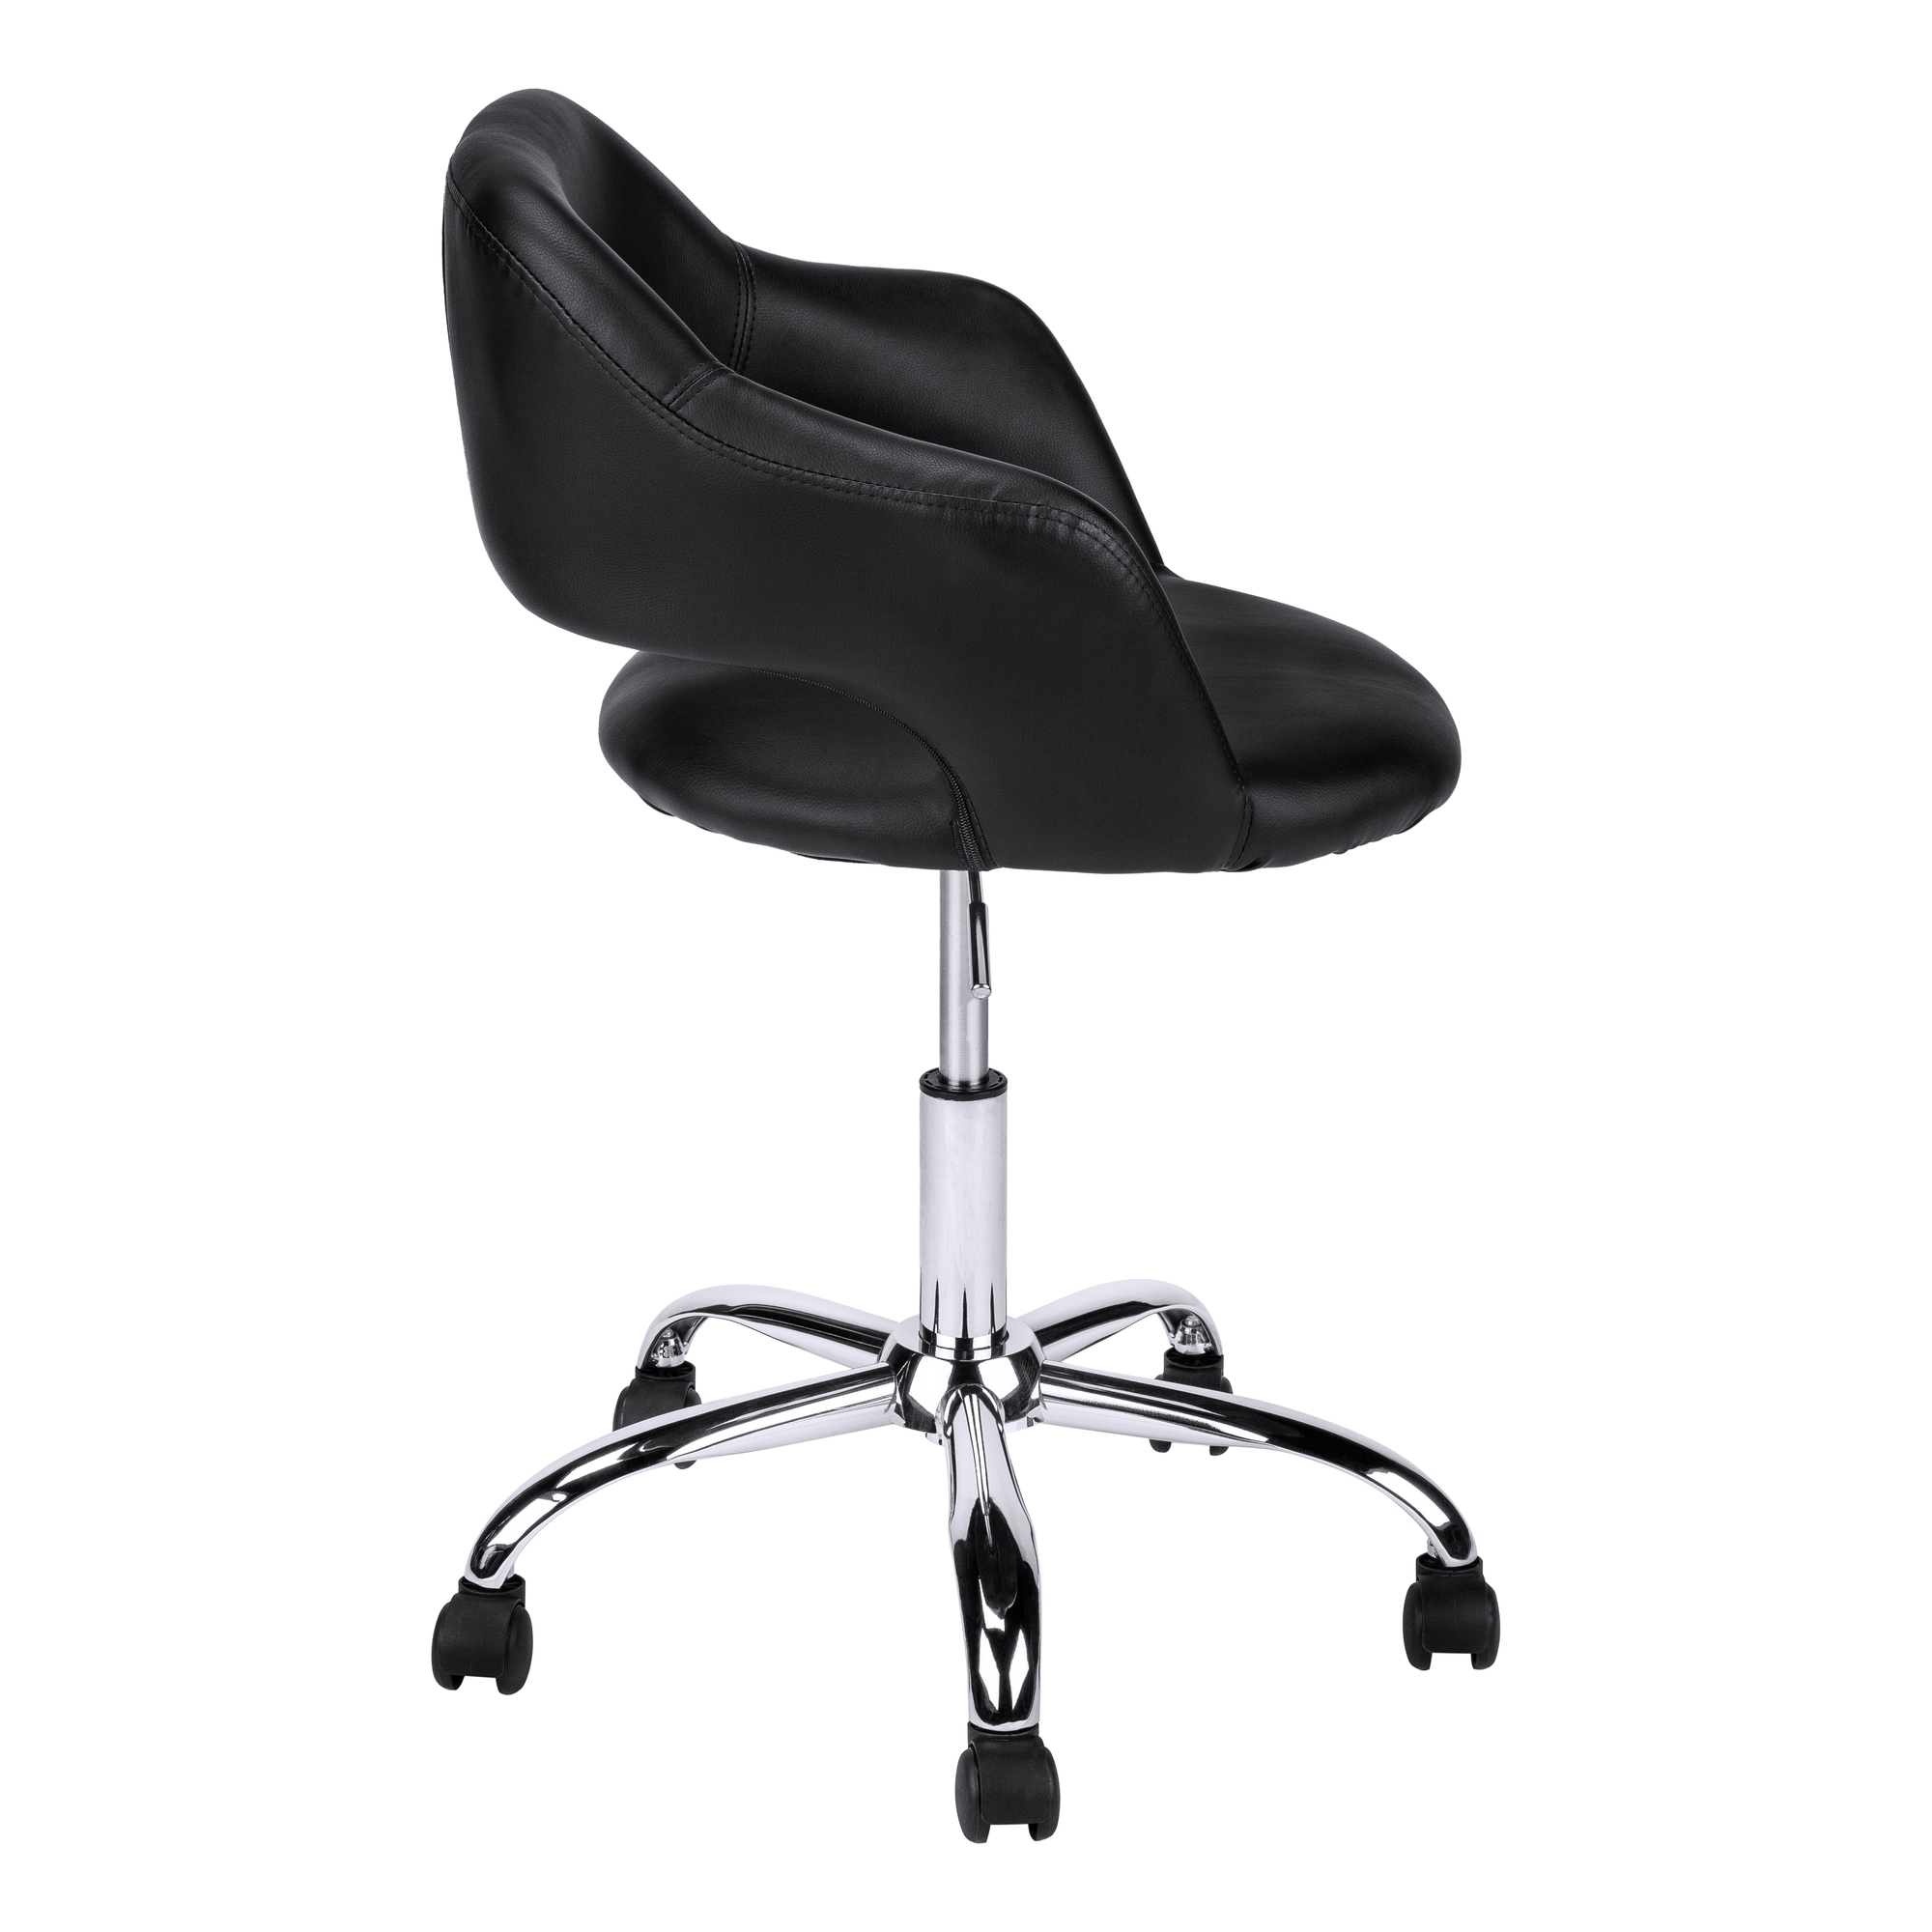 21" x 22.5" x 29" BlackChrome Metal Hydraulic Lift Base Office Chair